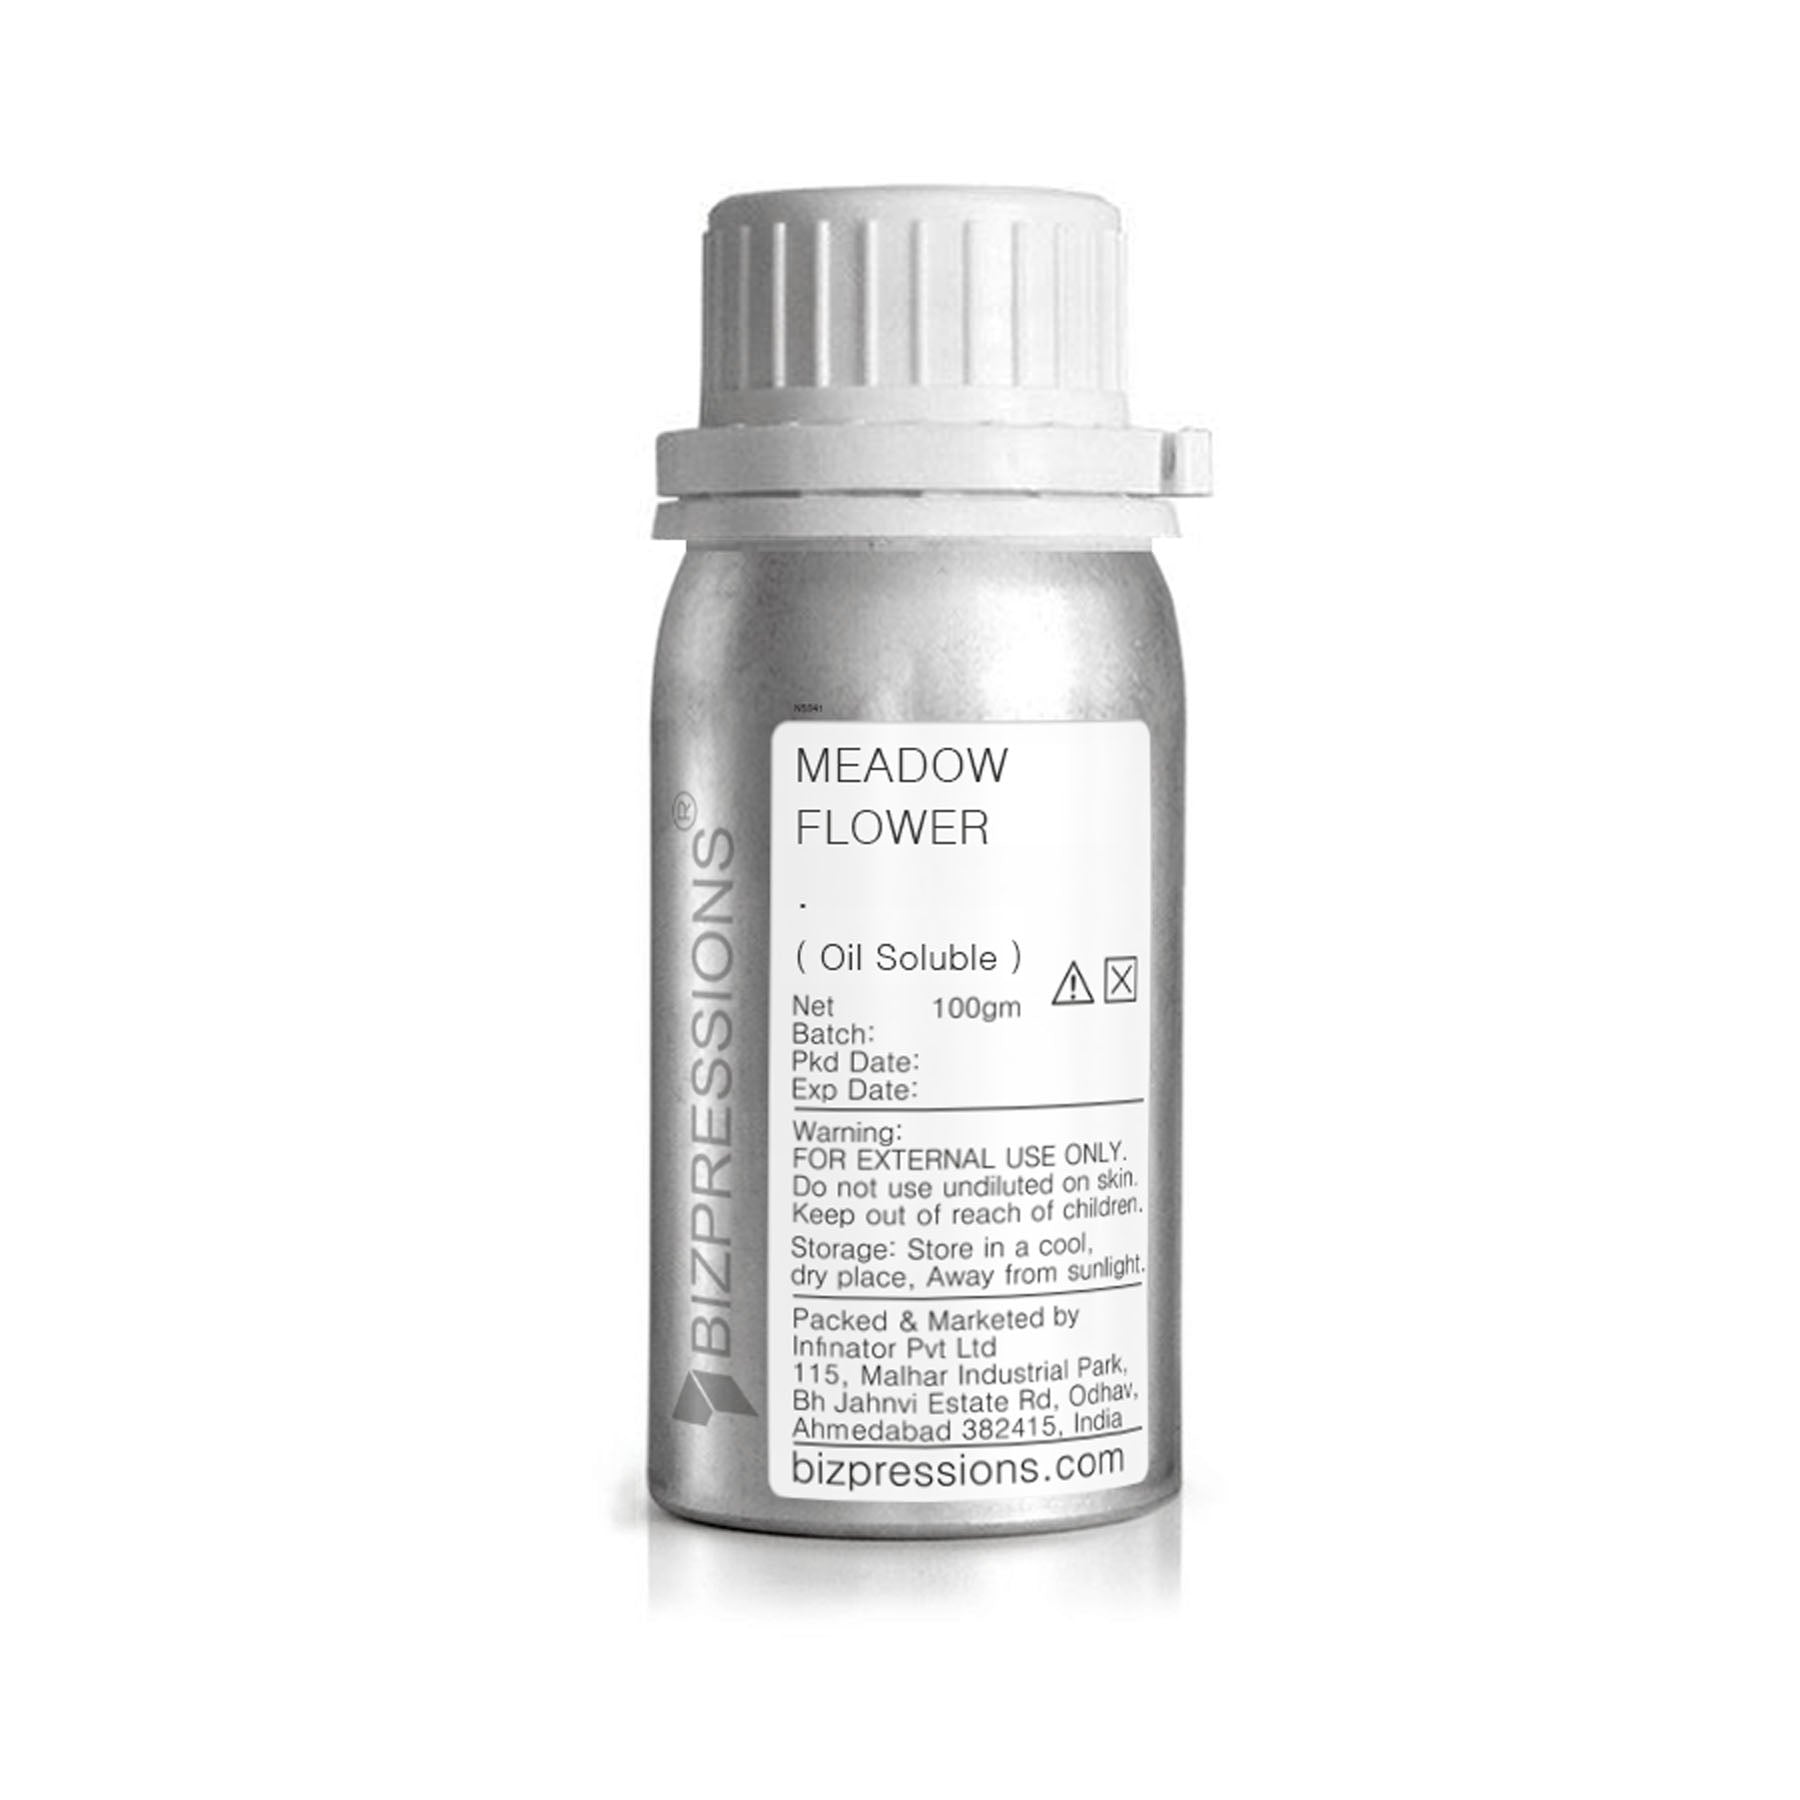 MEADOW FLOWER - Fragrance ( Oil Soluble ) - 100 gm